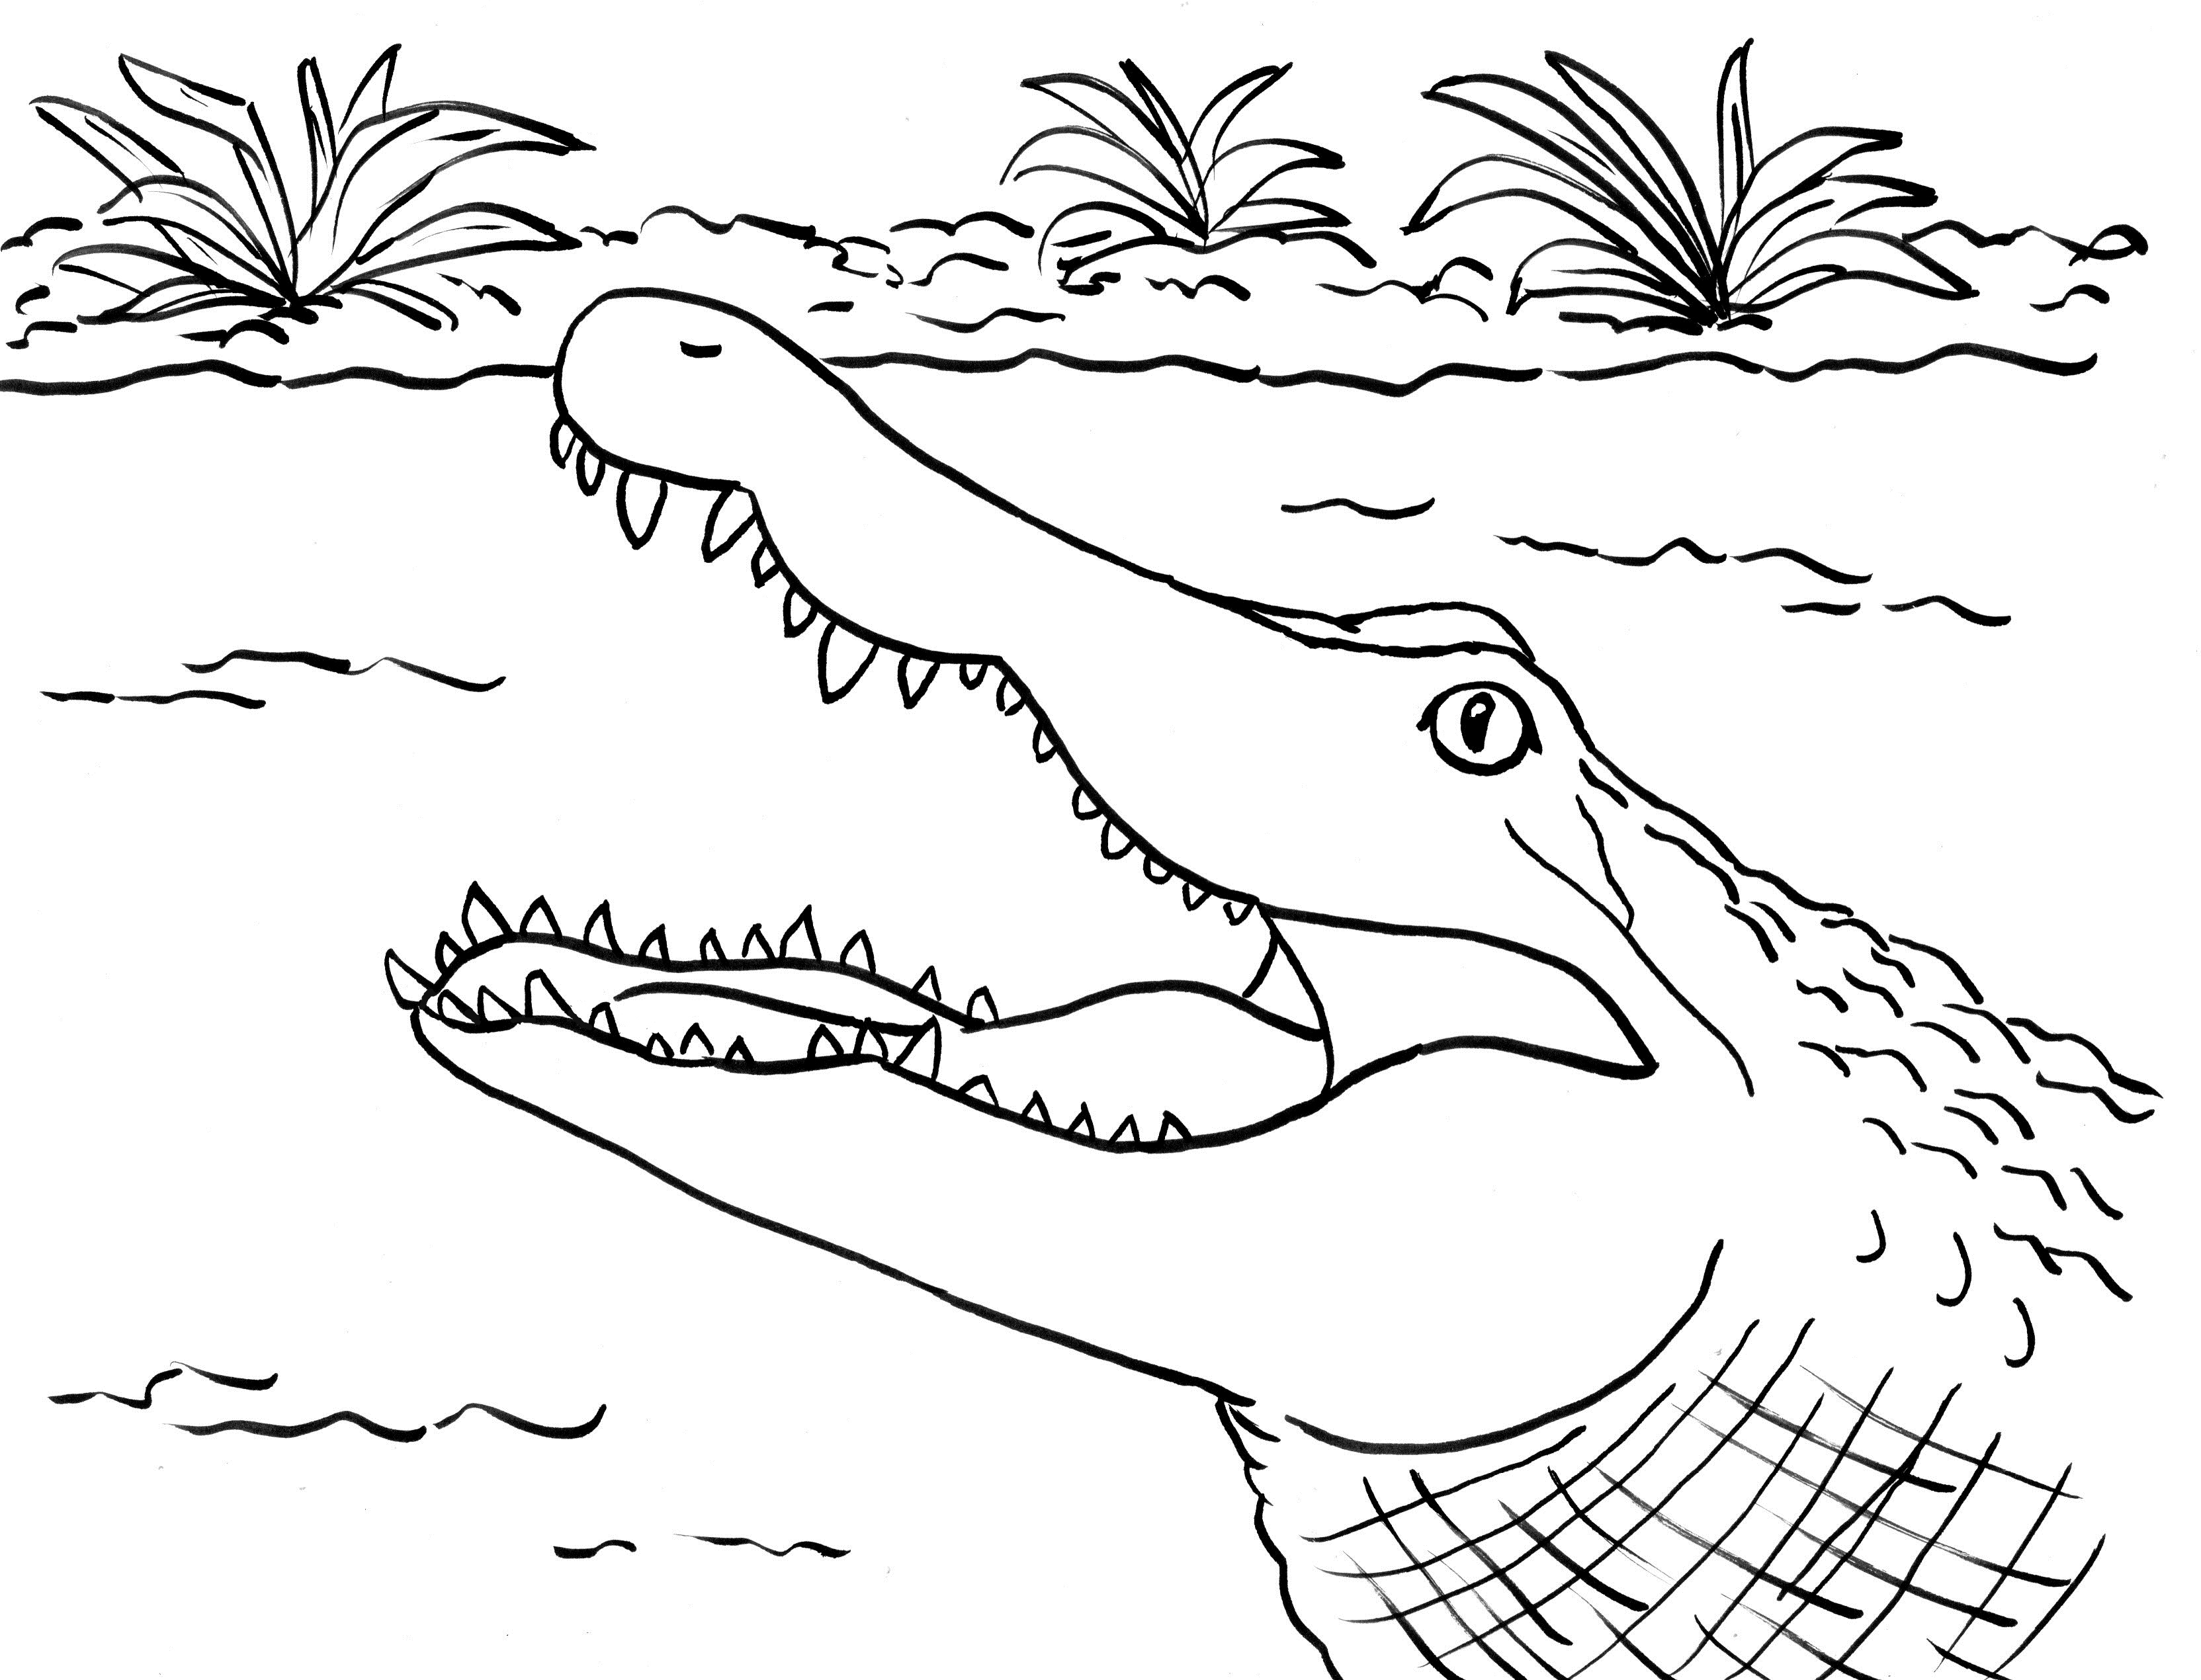 alligator-coloring-page-samantha-bell